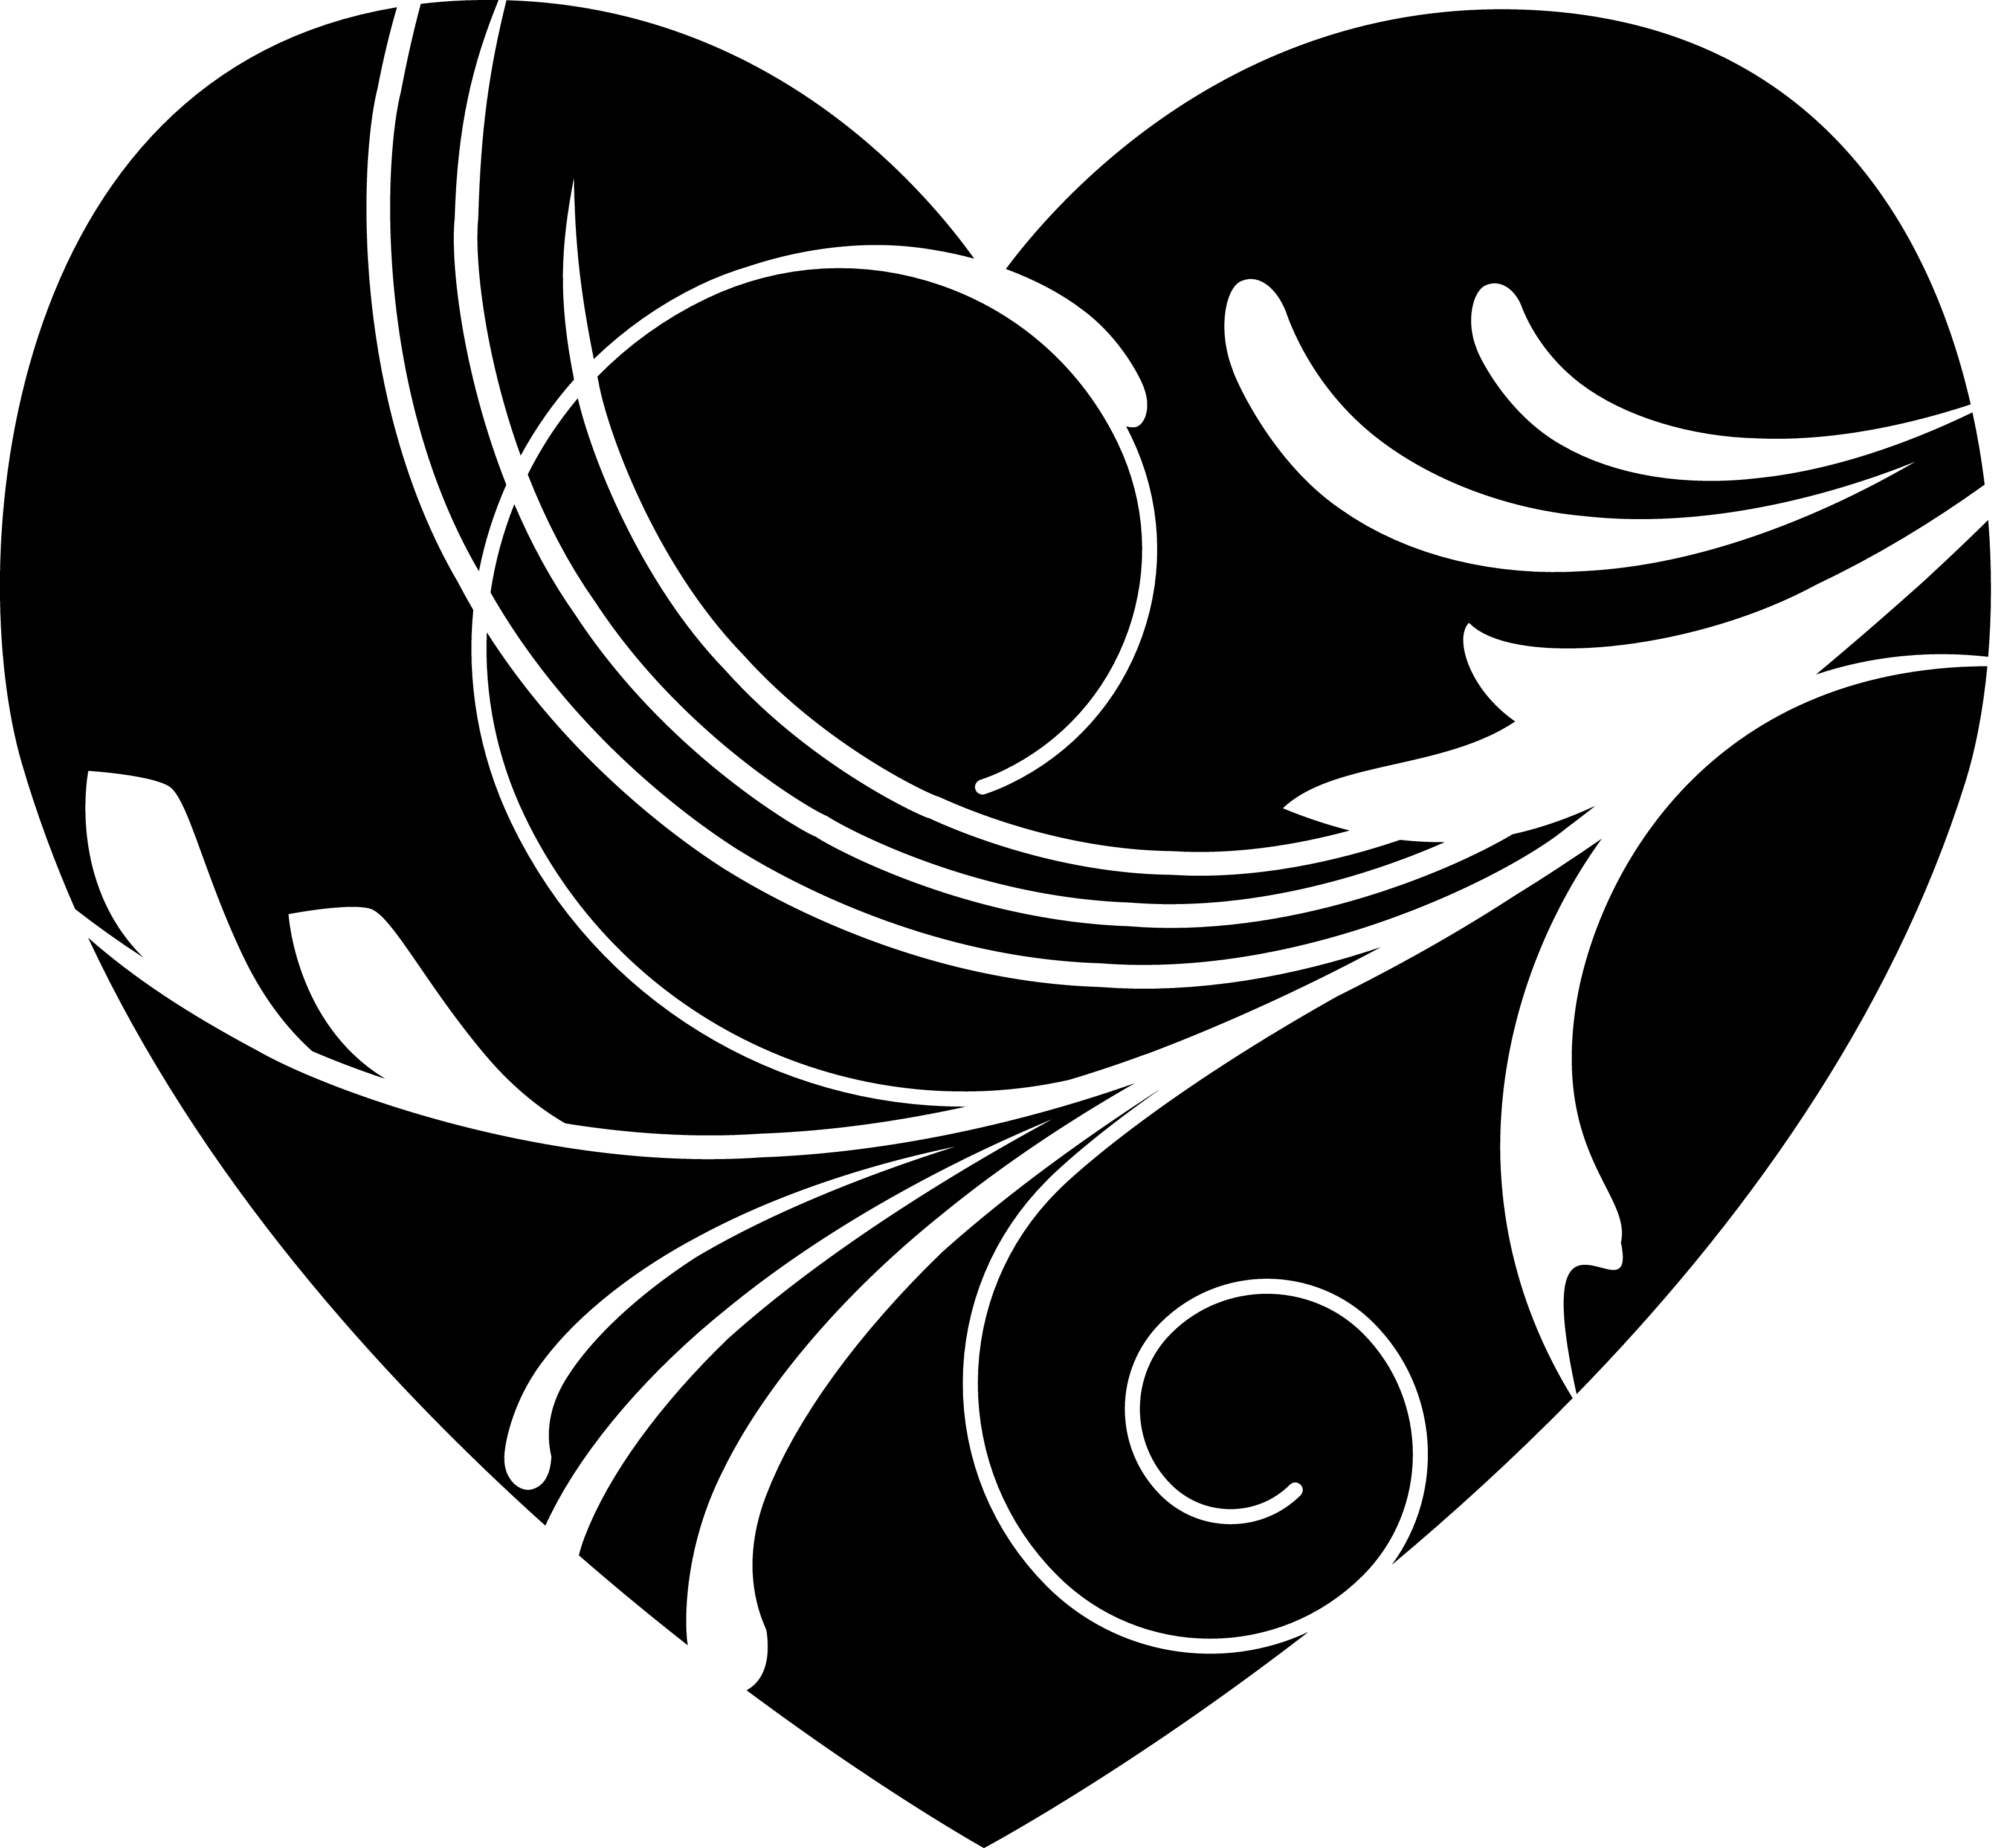 Heart Black and White Logo - Free White Heart Clipart, Download Free Clip Art, Free Clip Art